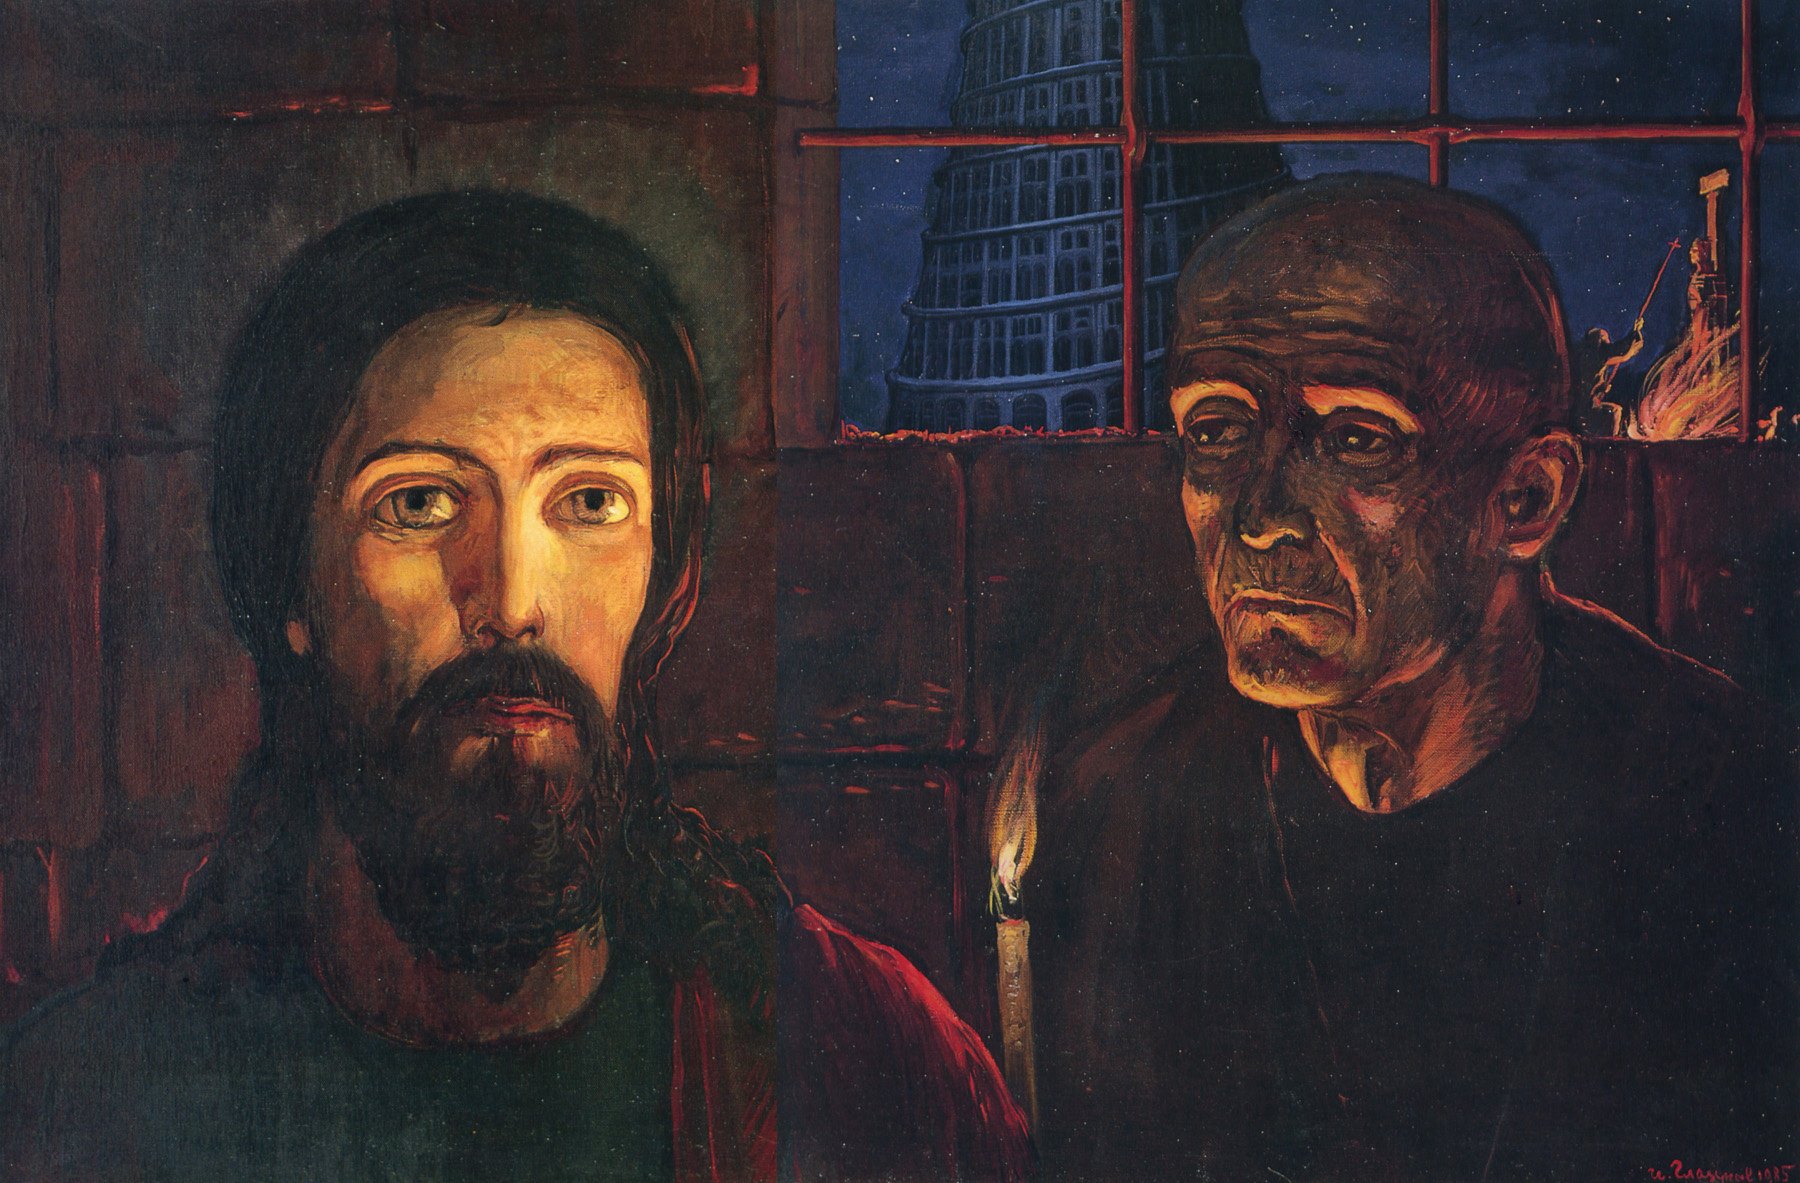 Ilia Glazunov "El Gran Inquisidor", 1985